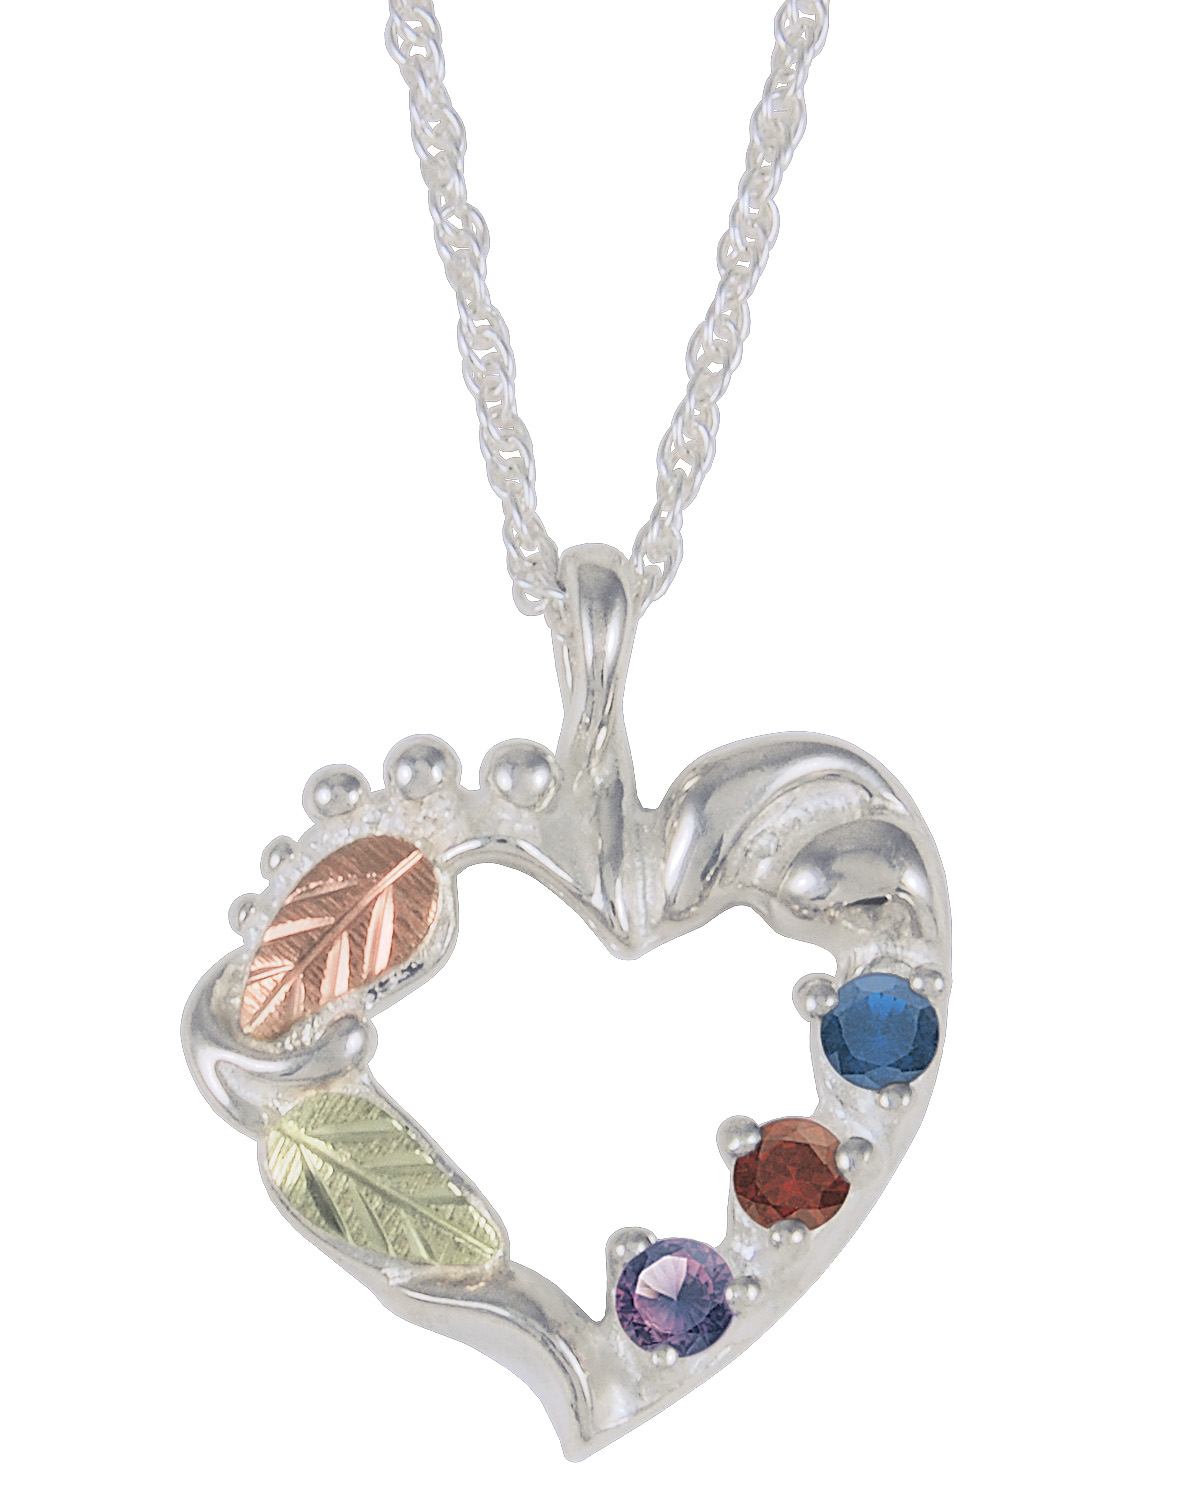 Amethyst, Smoky Quartz, Sapphire Heart Pendant Necklace, Sterling Silver